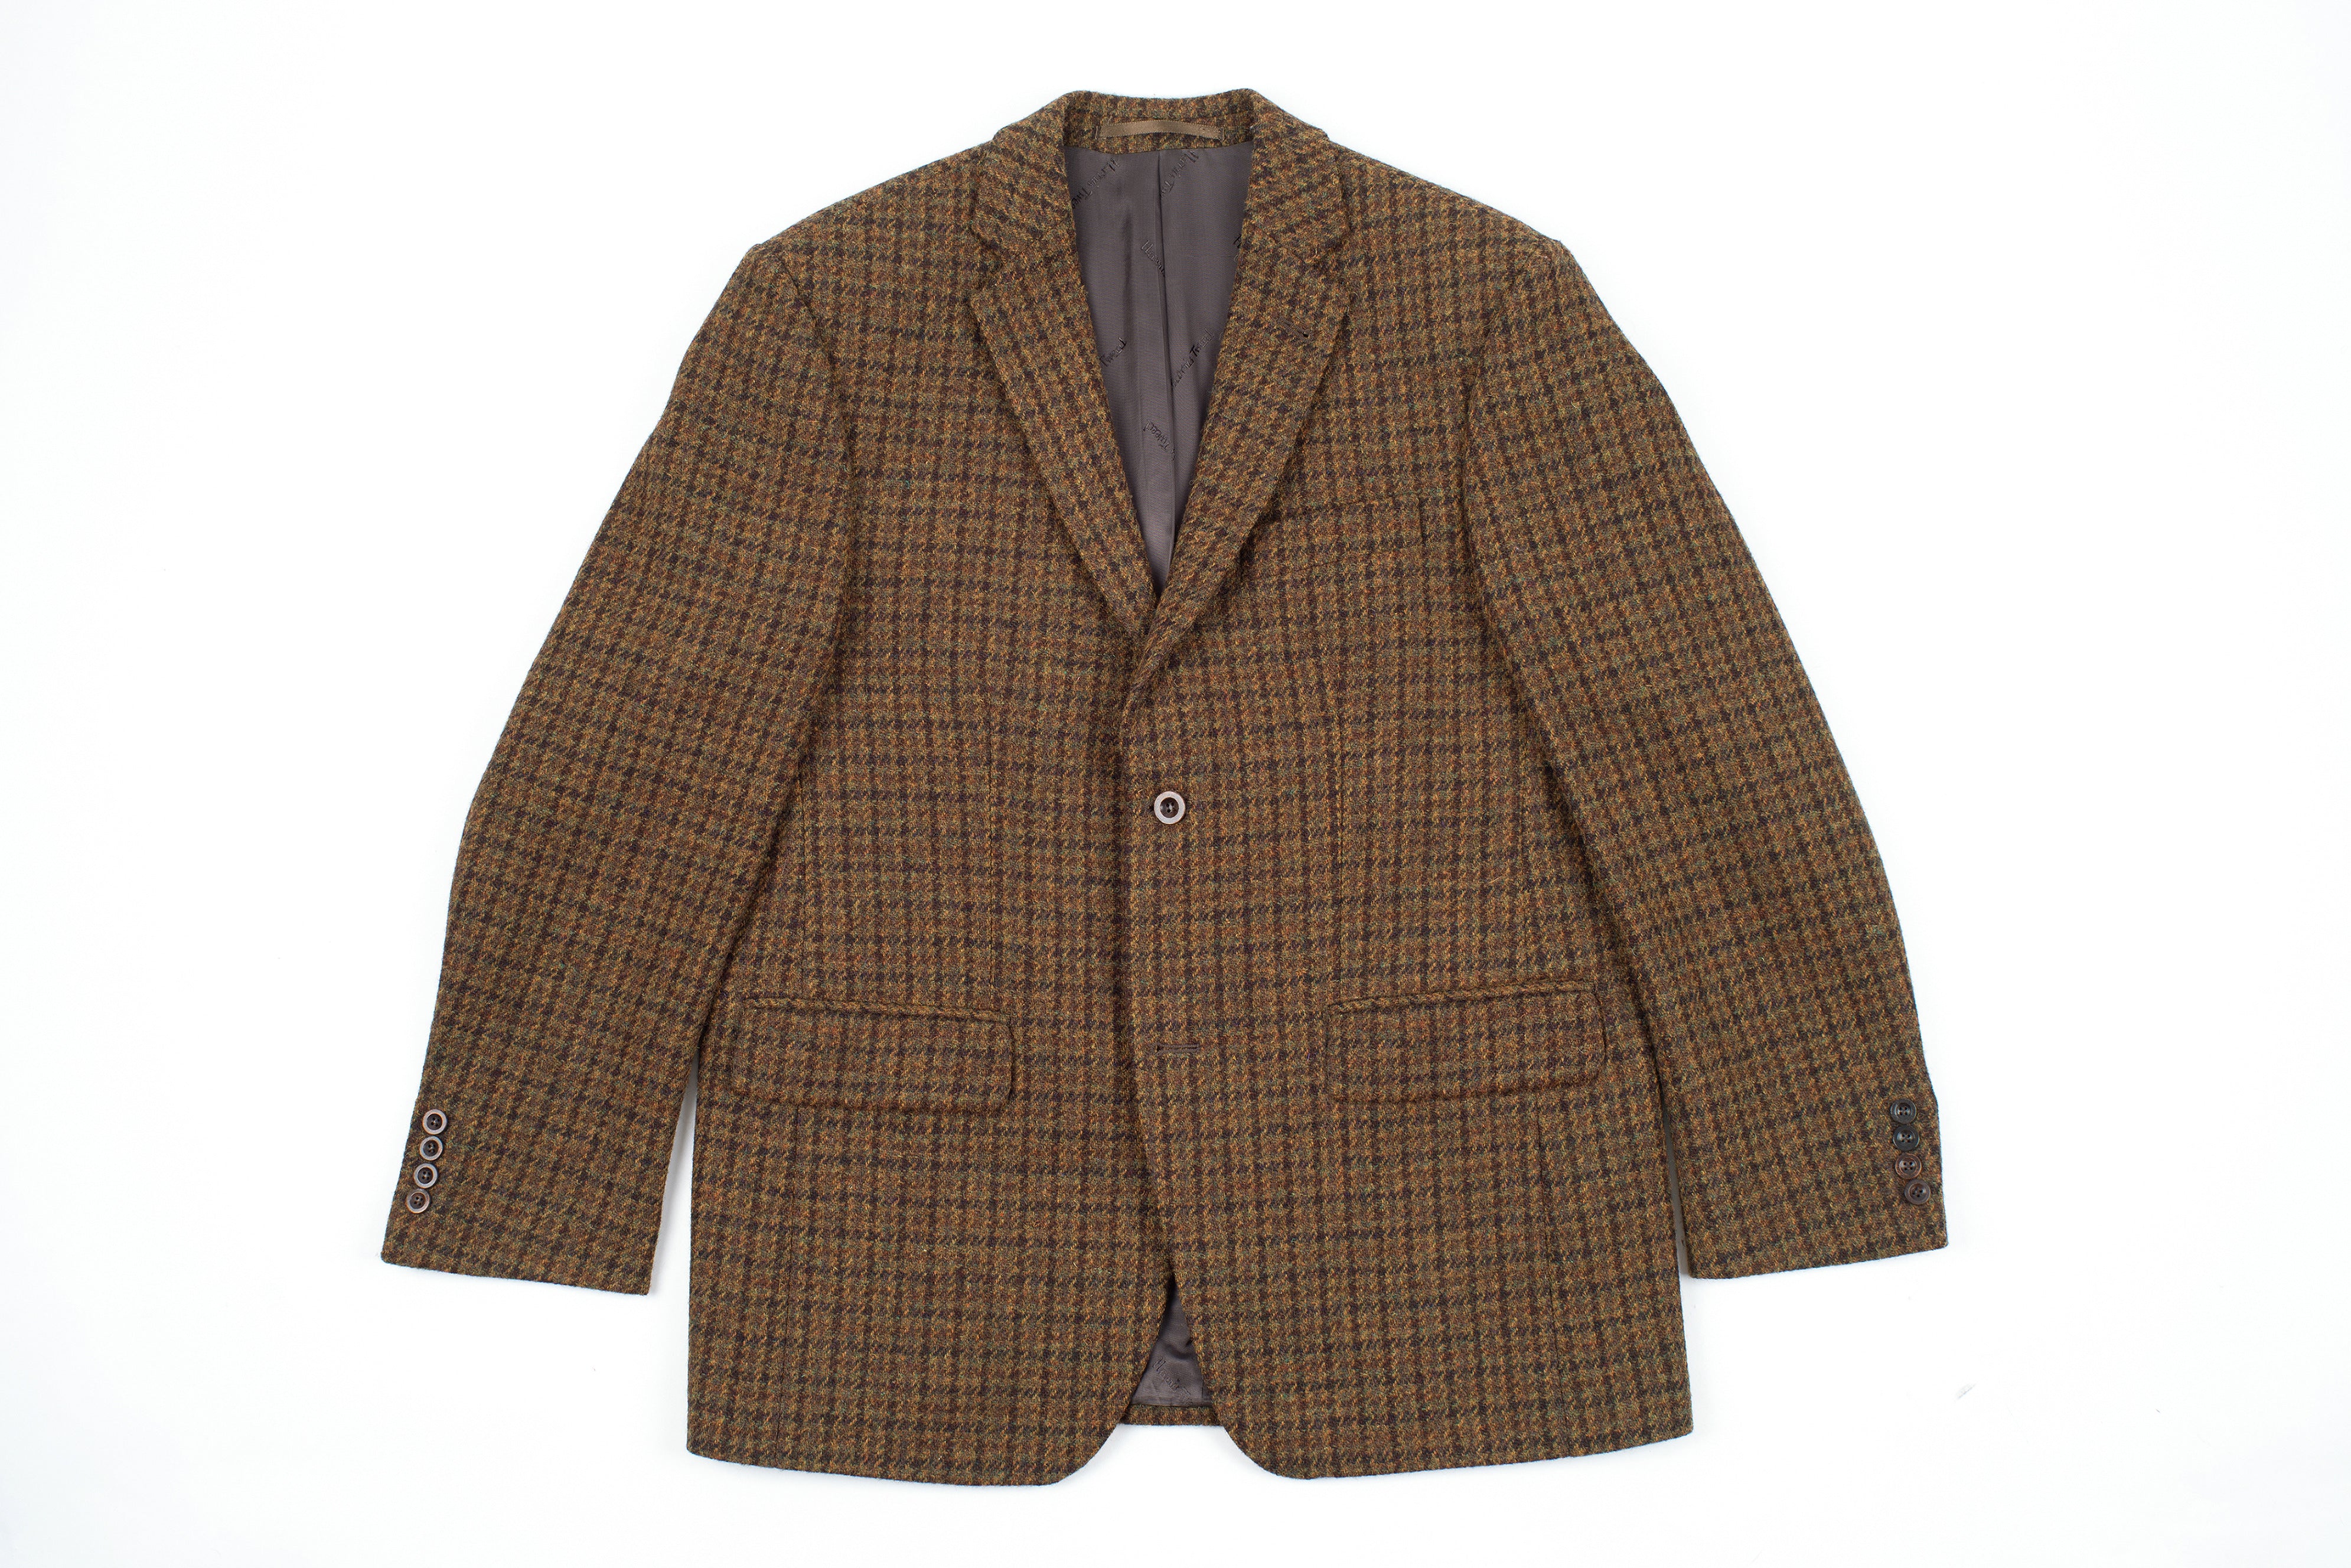 Harris Tweed Wool Gun Check  Brown 2 Button Blazer, US 40S, EU 25